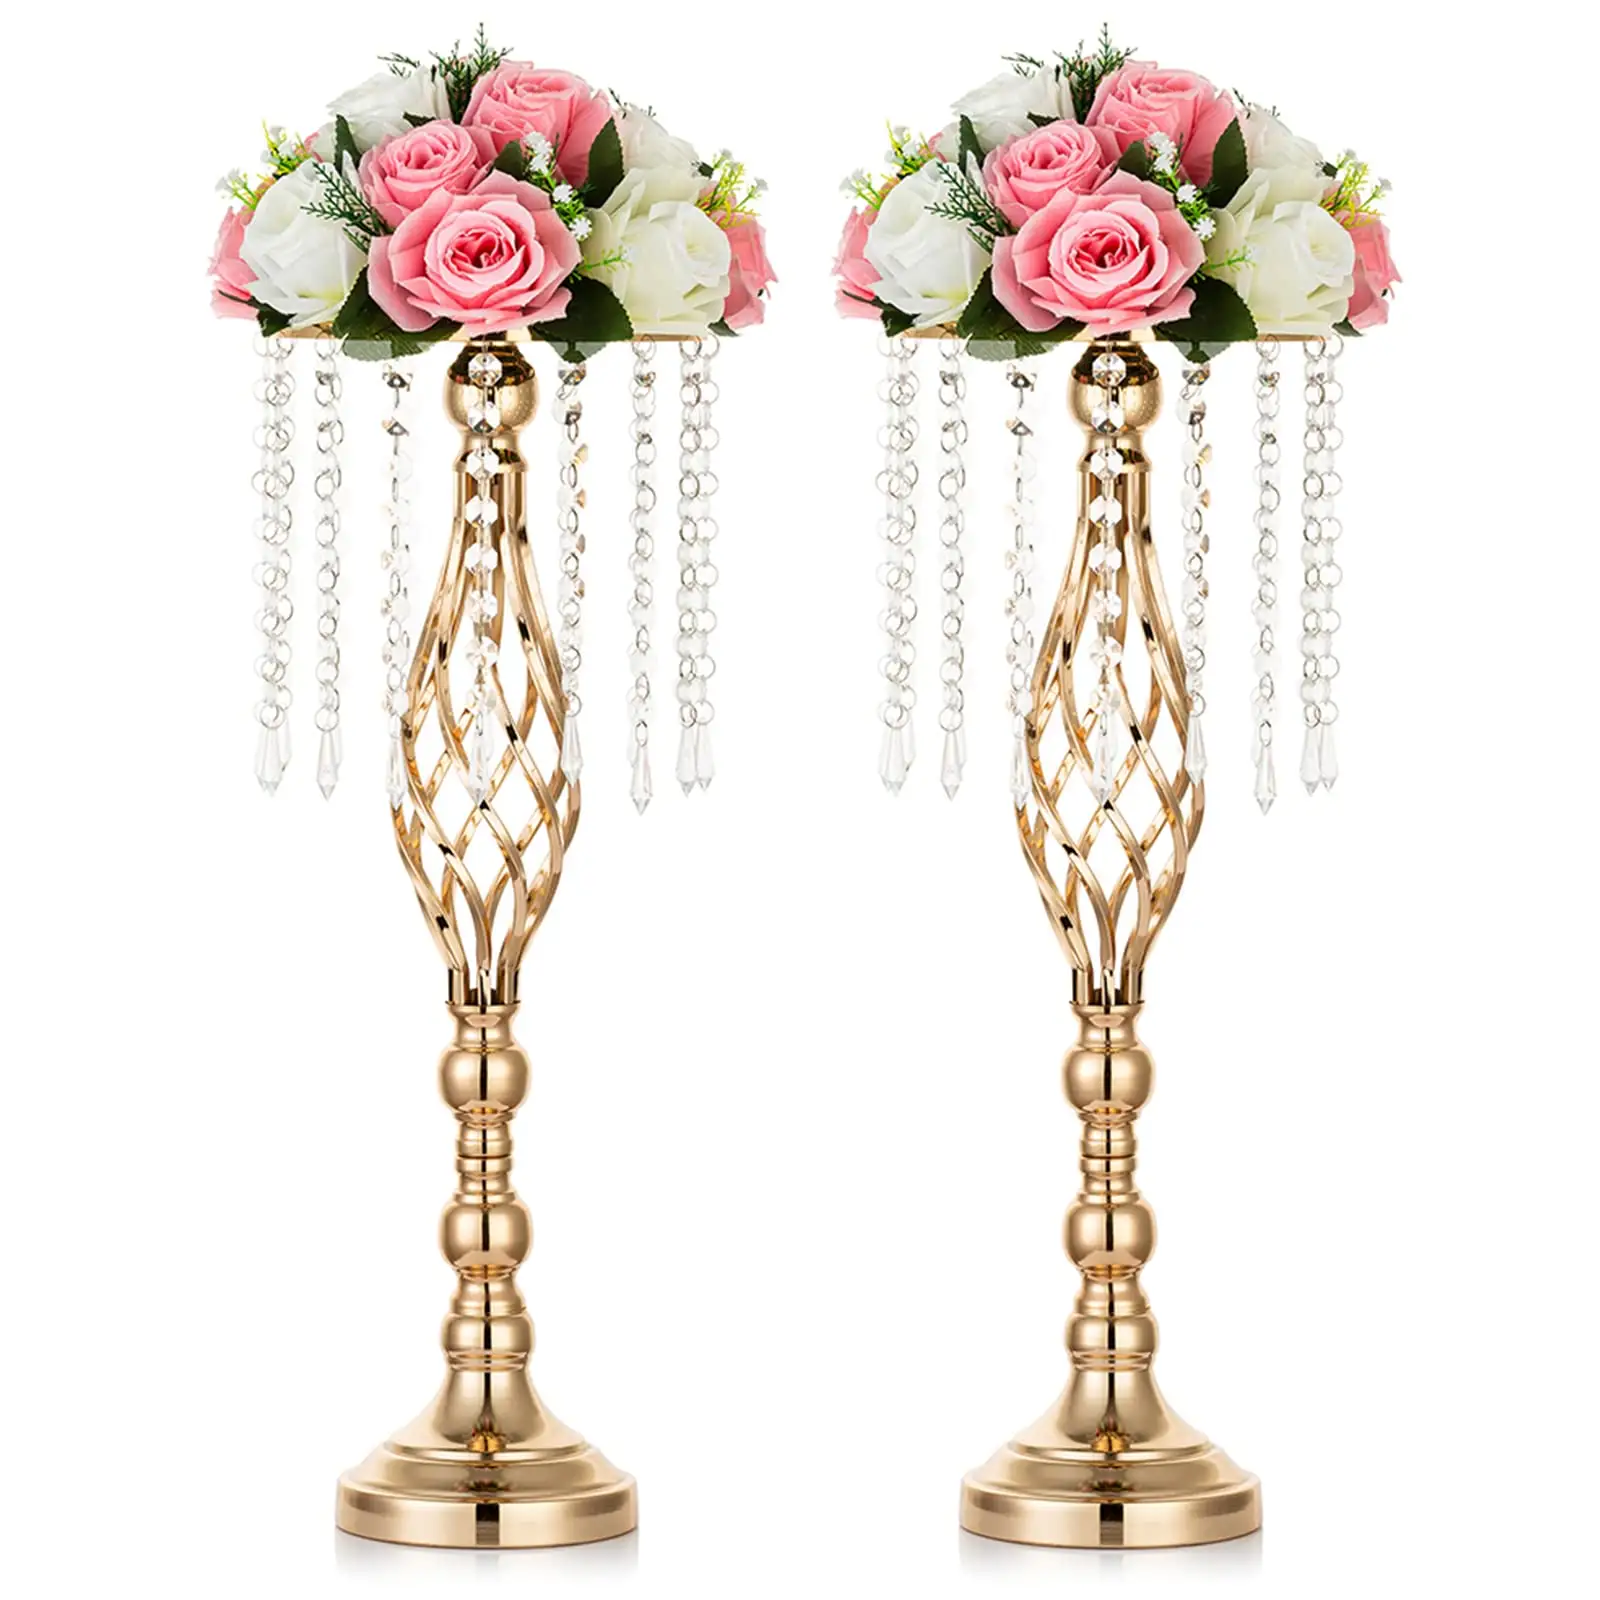 Florero de Metal alto, jarrones dorados para centros de mesa, arreglo floral de cristal, mesa, centros de mesa de boda